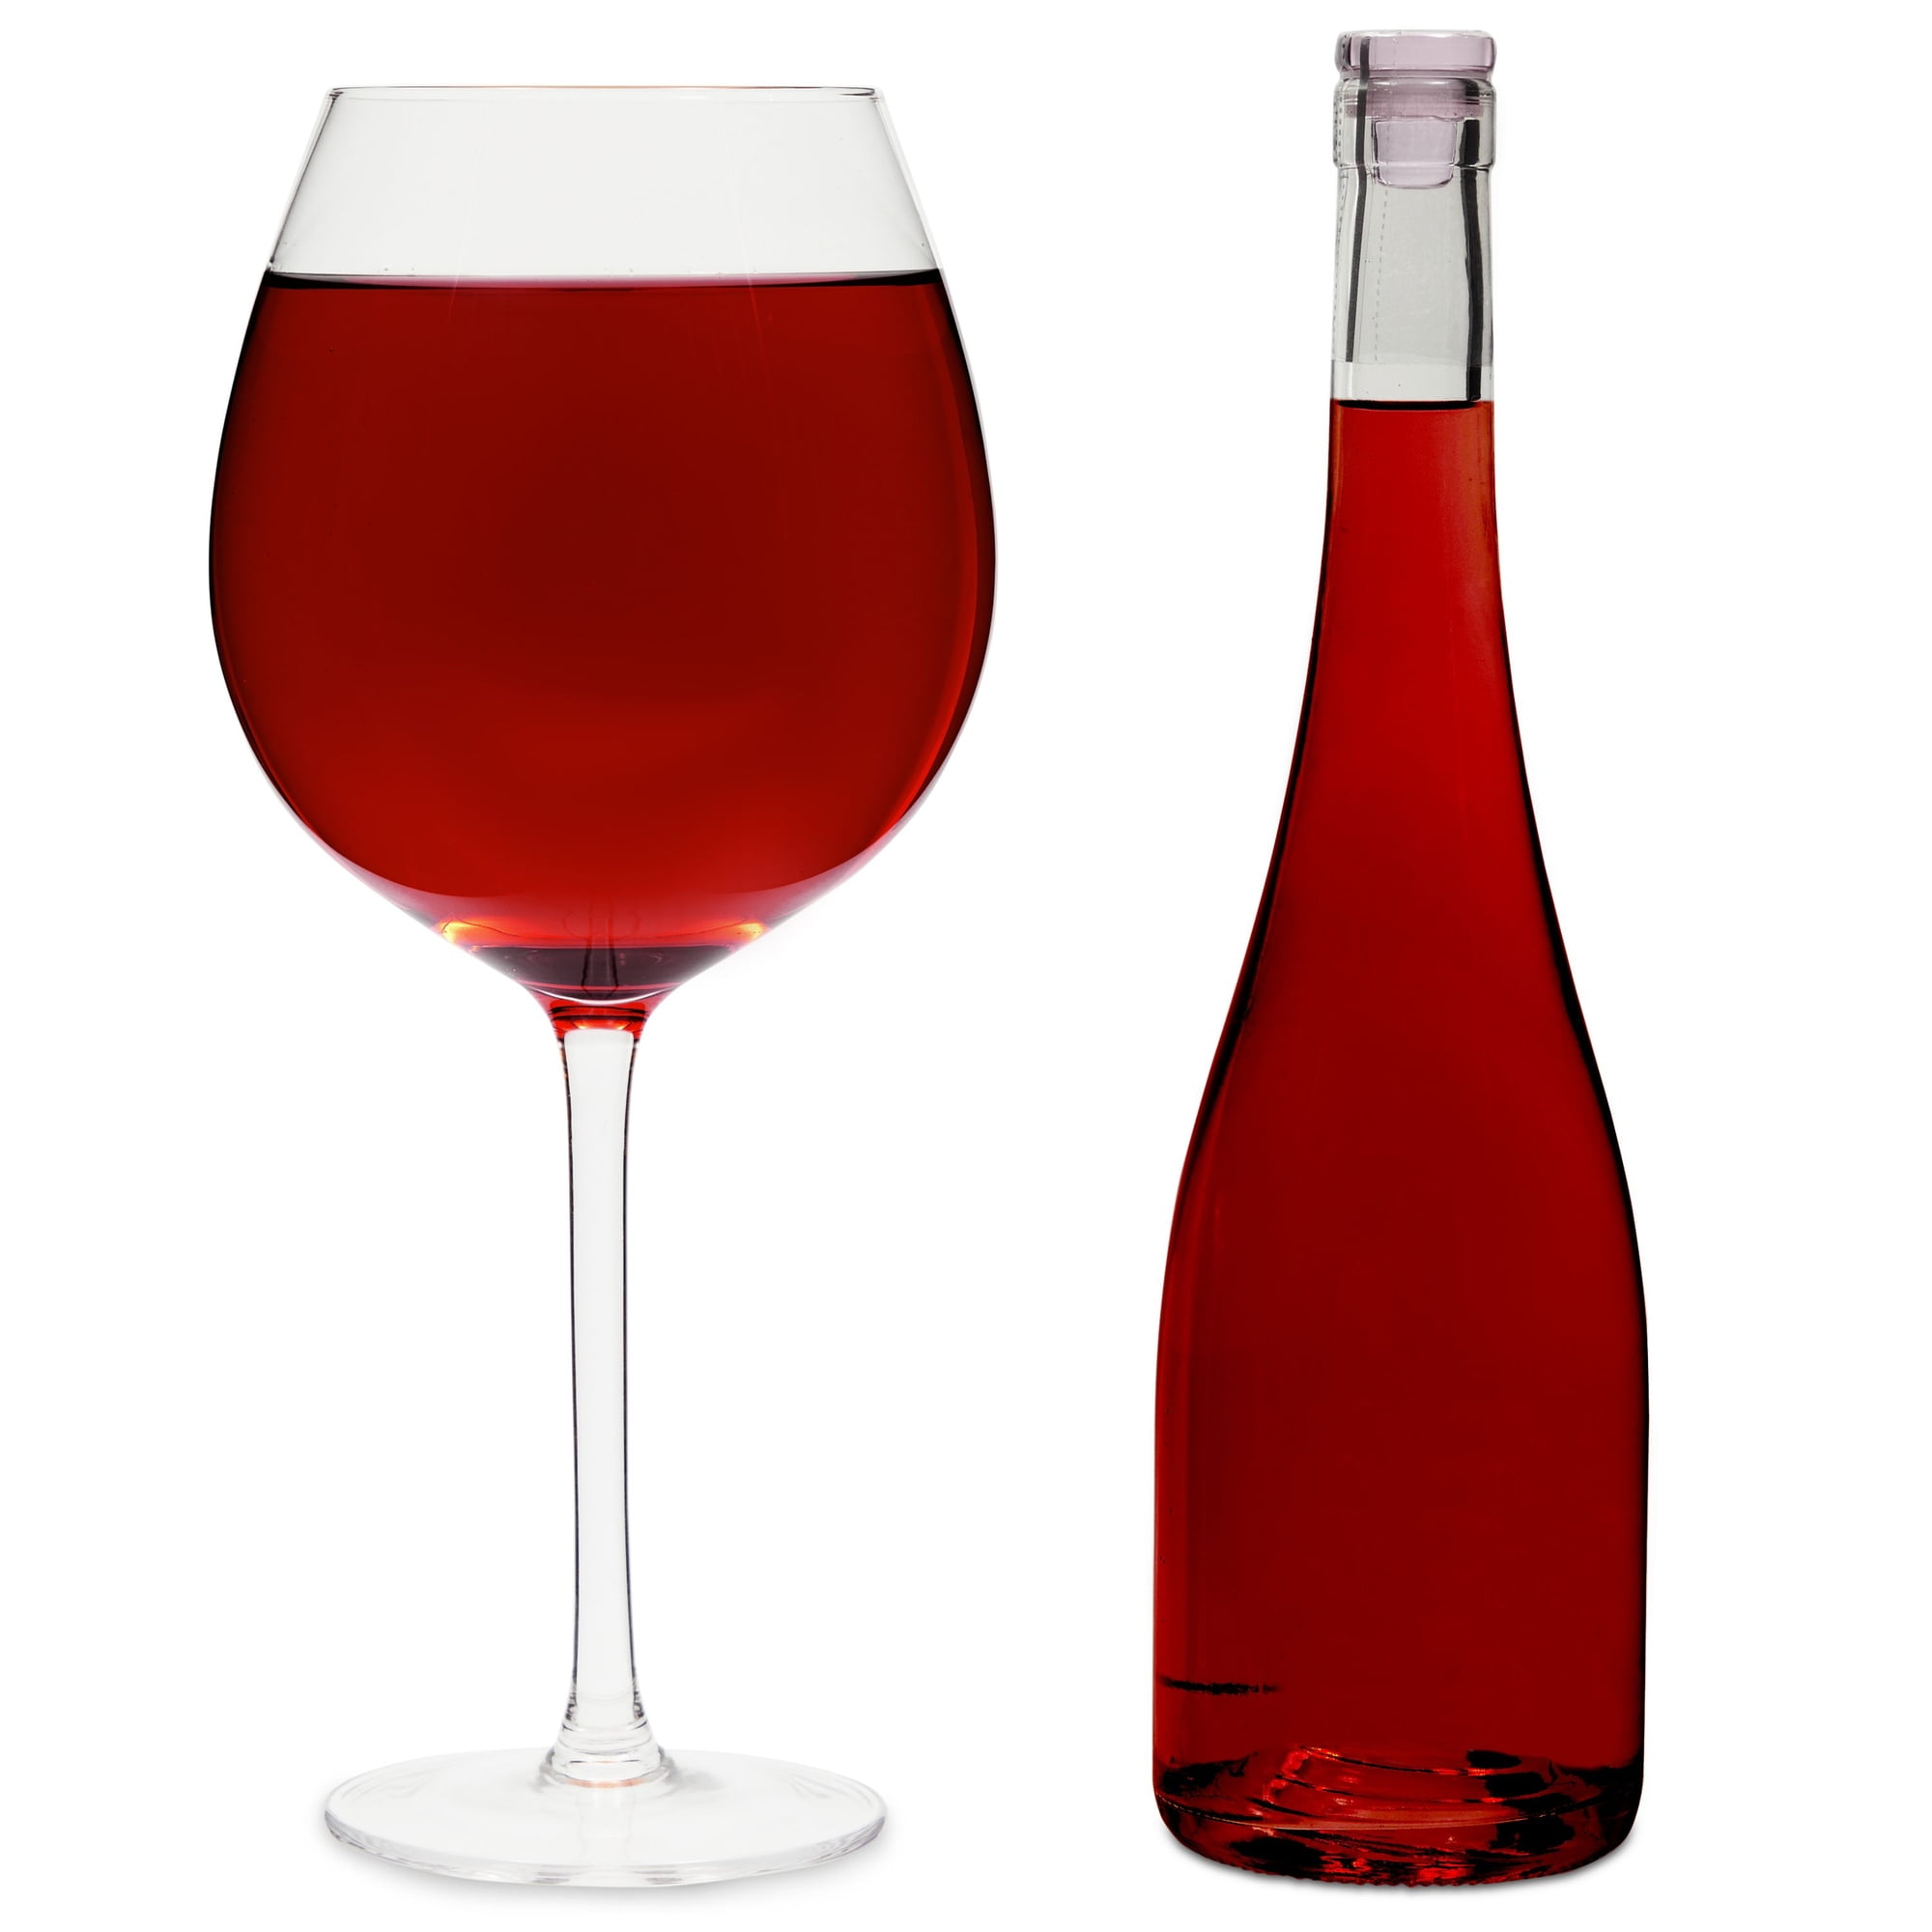 Huge wine glass slushie, cherry, wine glass